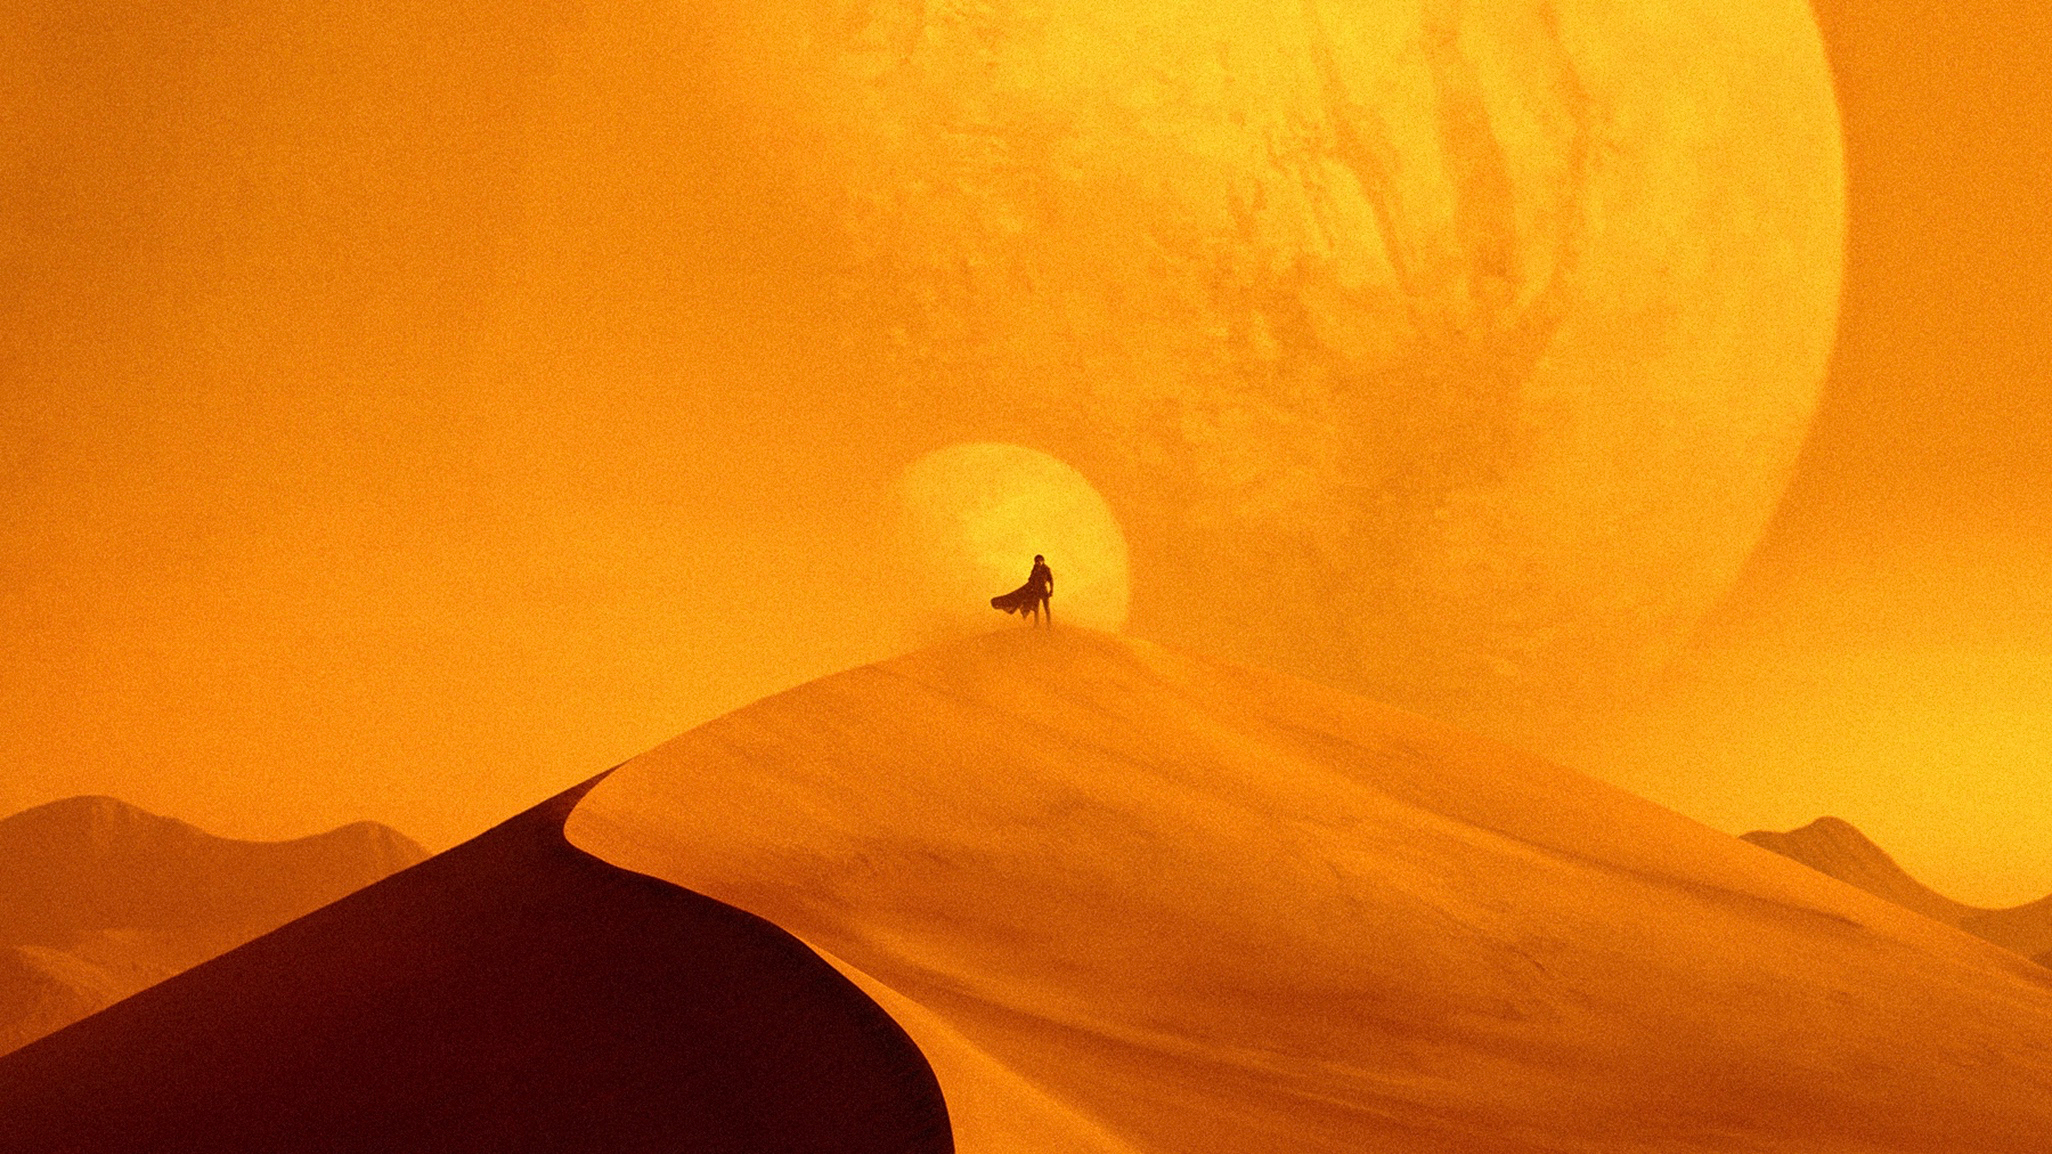 General 2052x1154 Dune (movie) Dune (series) desert Sun movies digital art hills sand minimalism standing